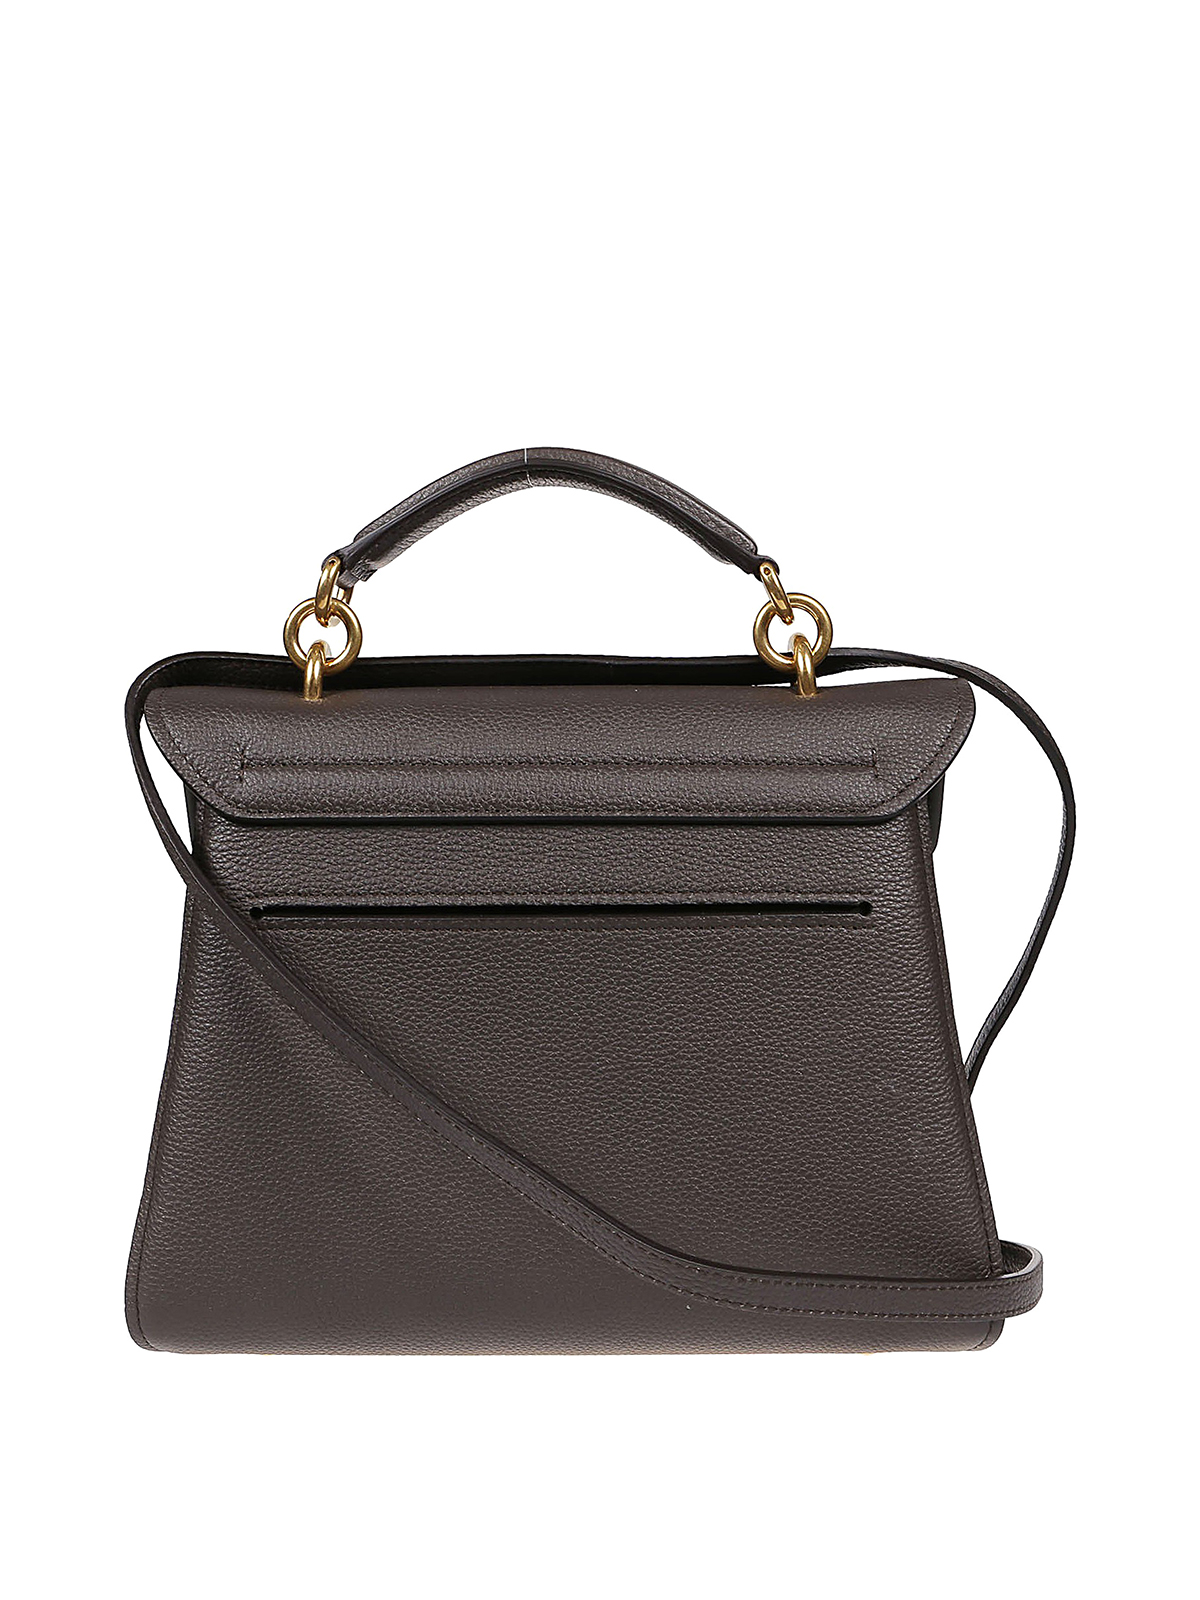 Shoulder bags Salvatore Ferragamo - Margot hammered leather small handle bag  - 21H493718461